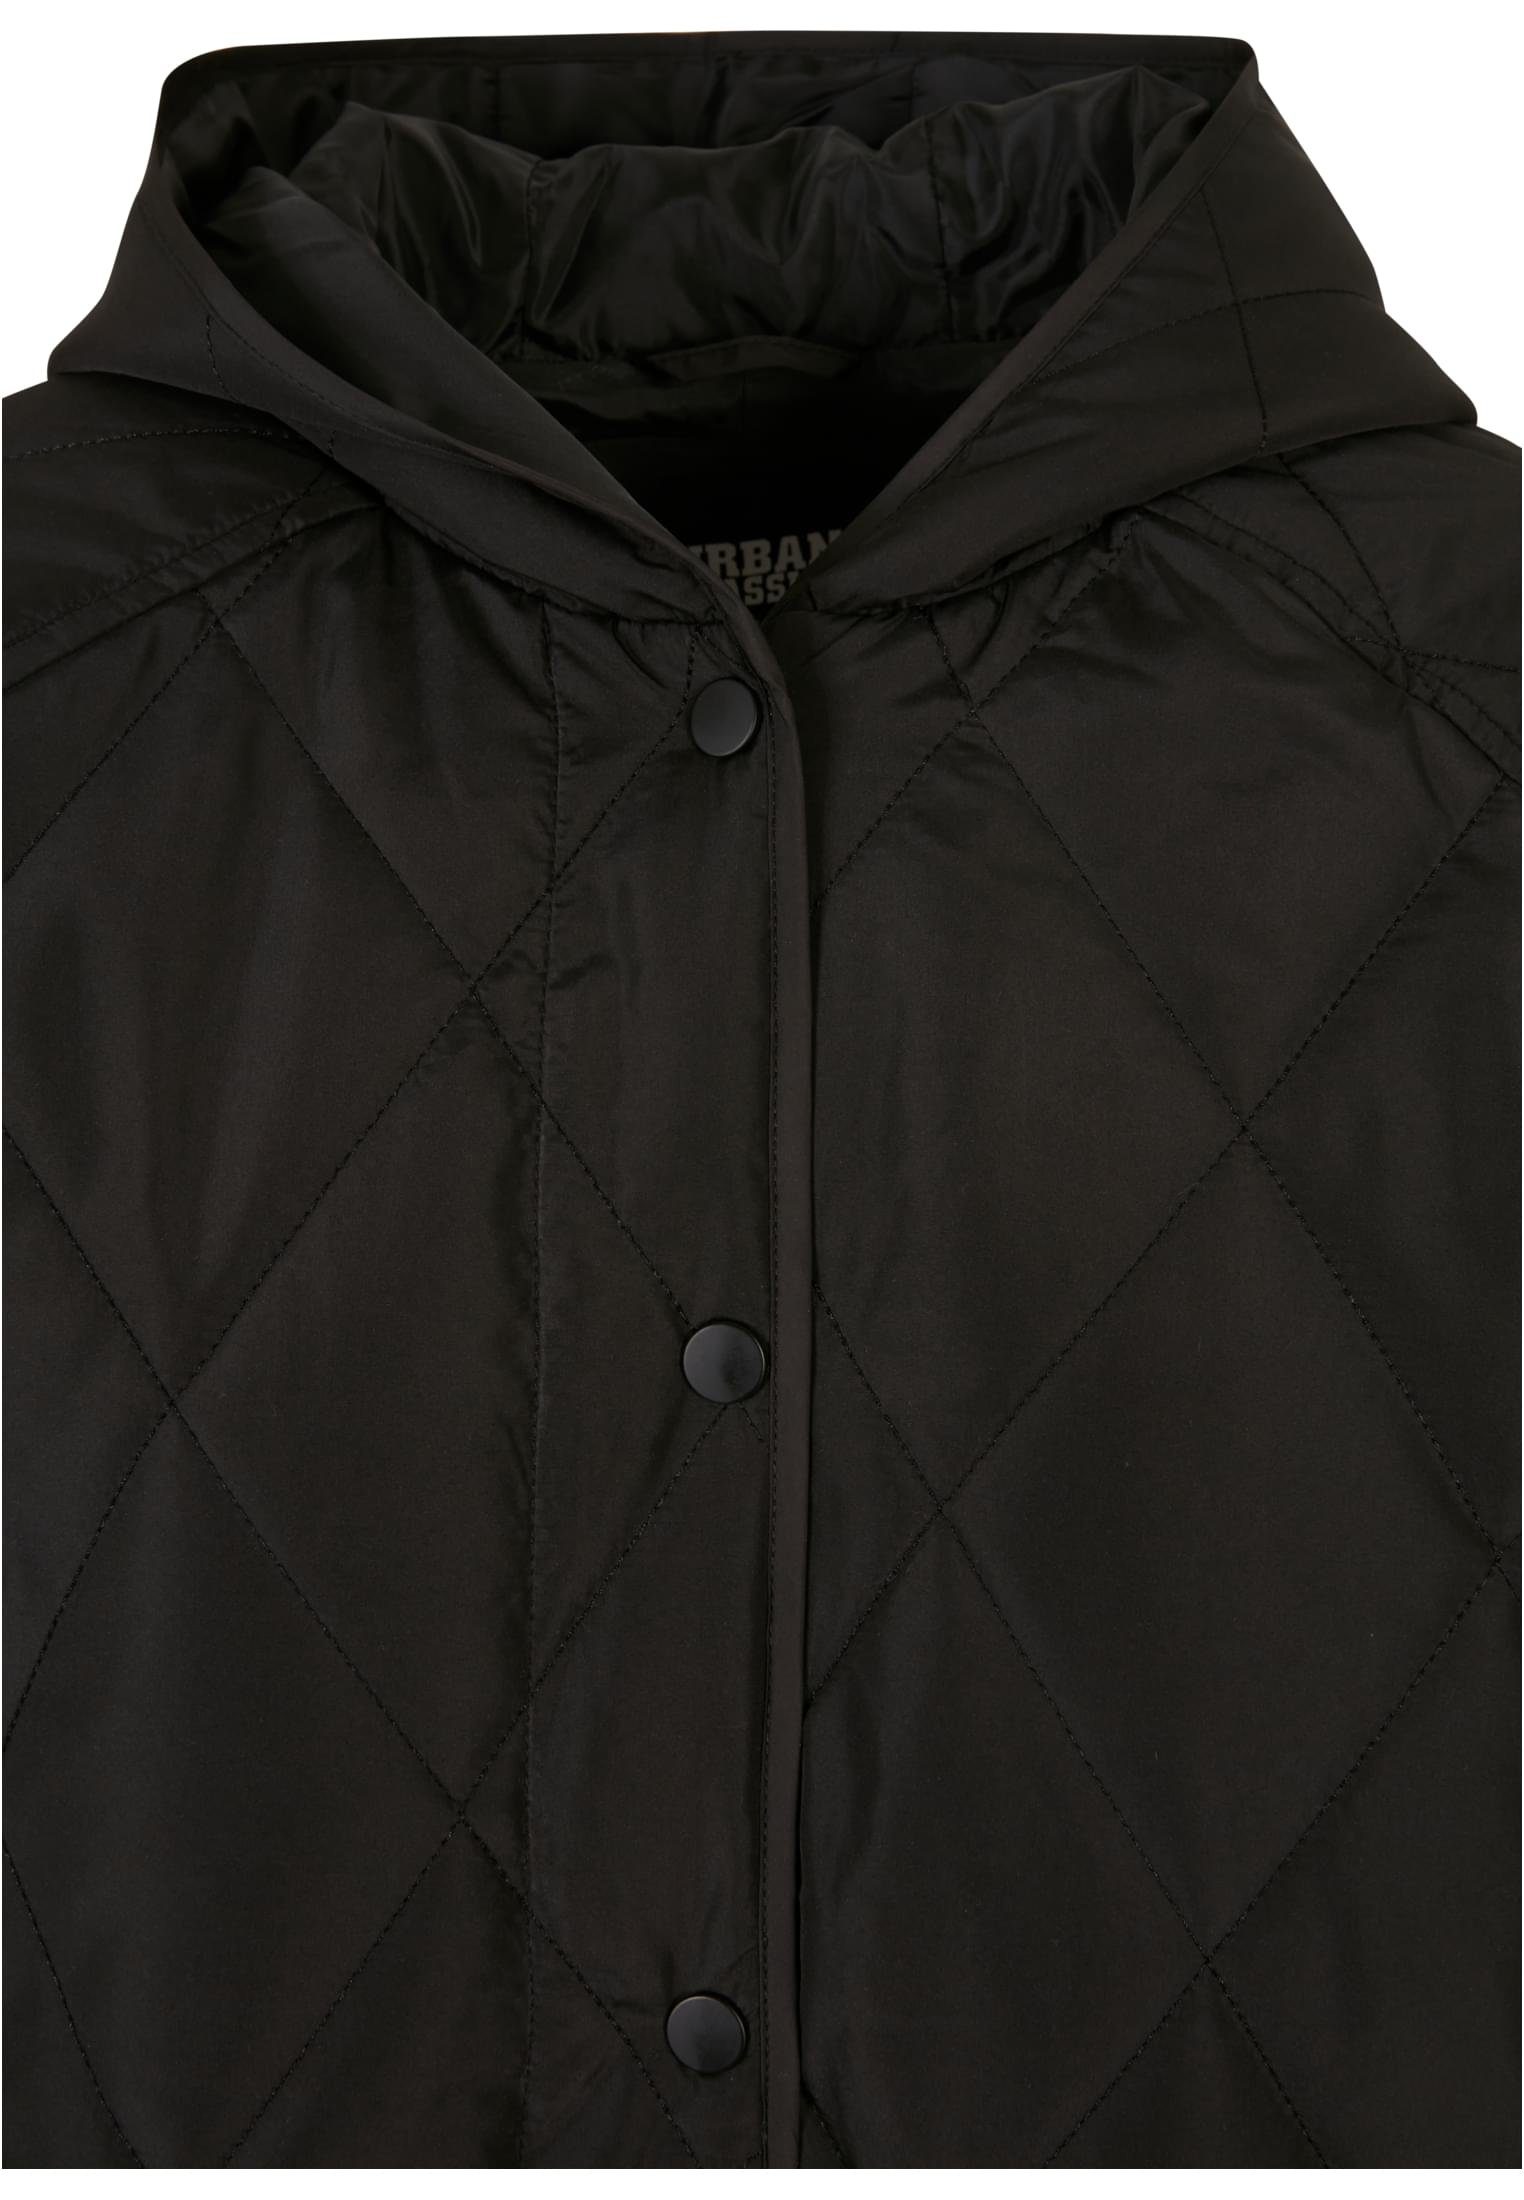 Oversized Outdoorjacke CLASSICS (1-St) black Hooded Coat Ladies Damen Diamond Quilted URBAN